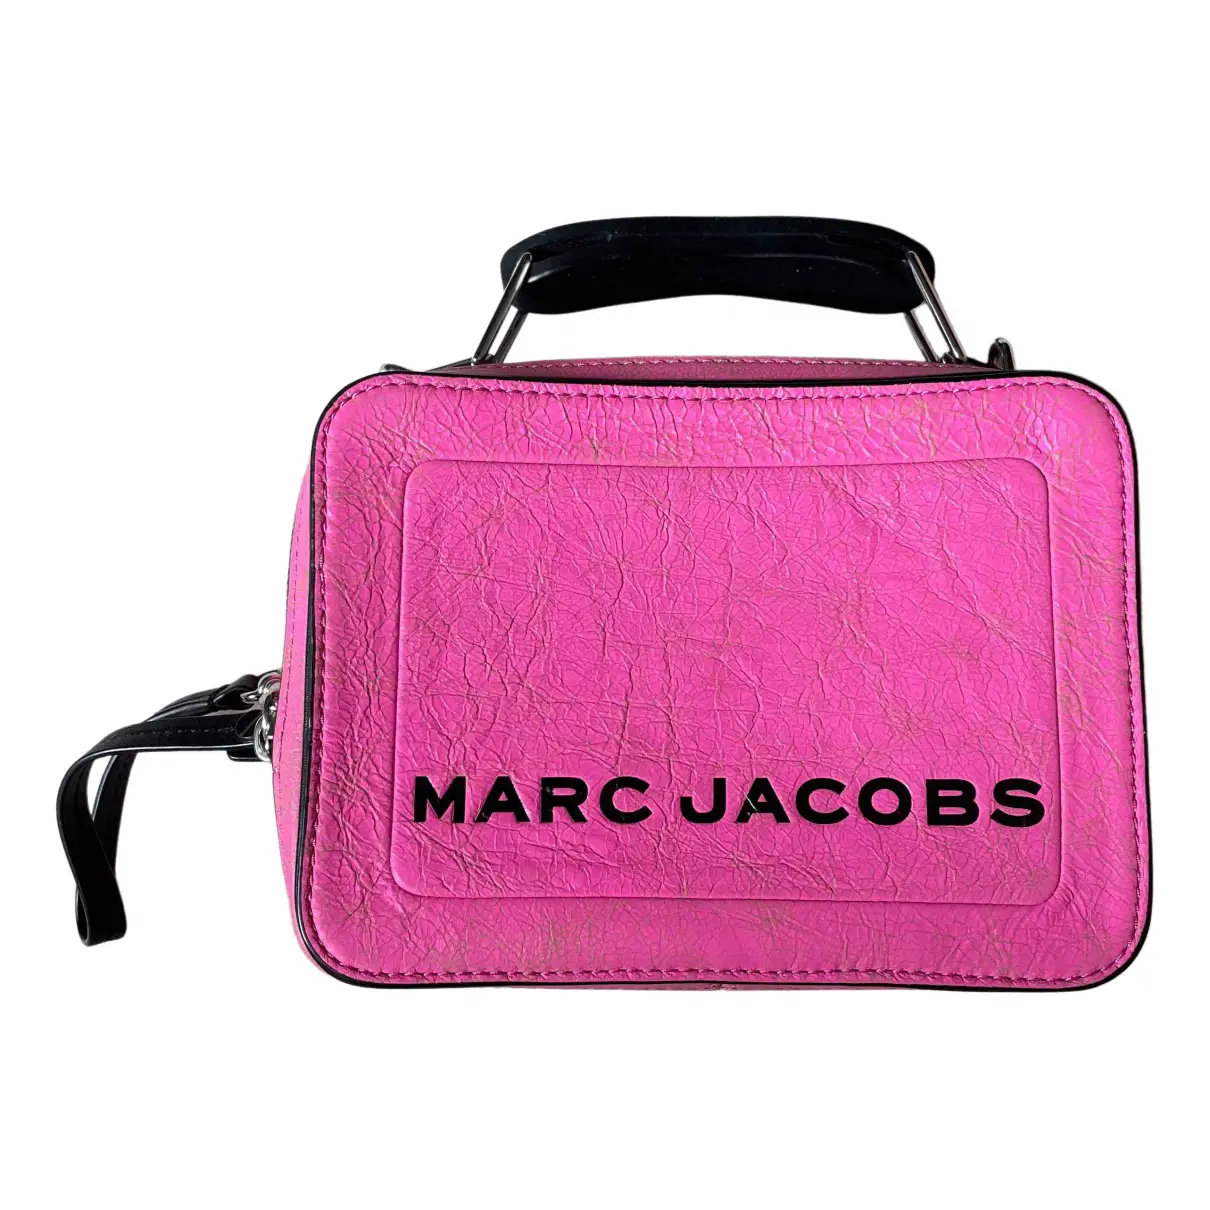 The Box Bag leather mini bag Marc Jacobs